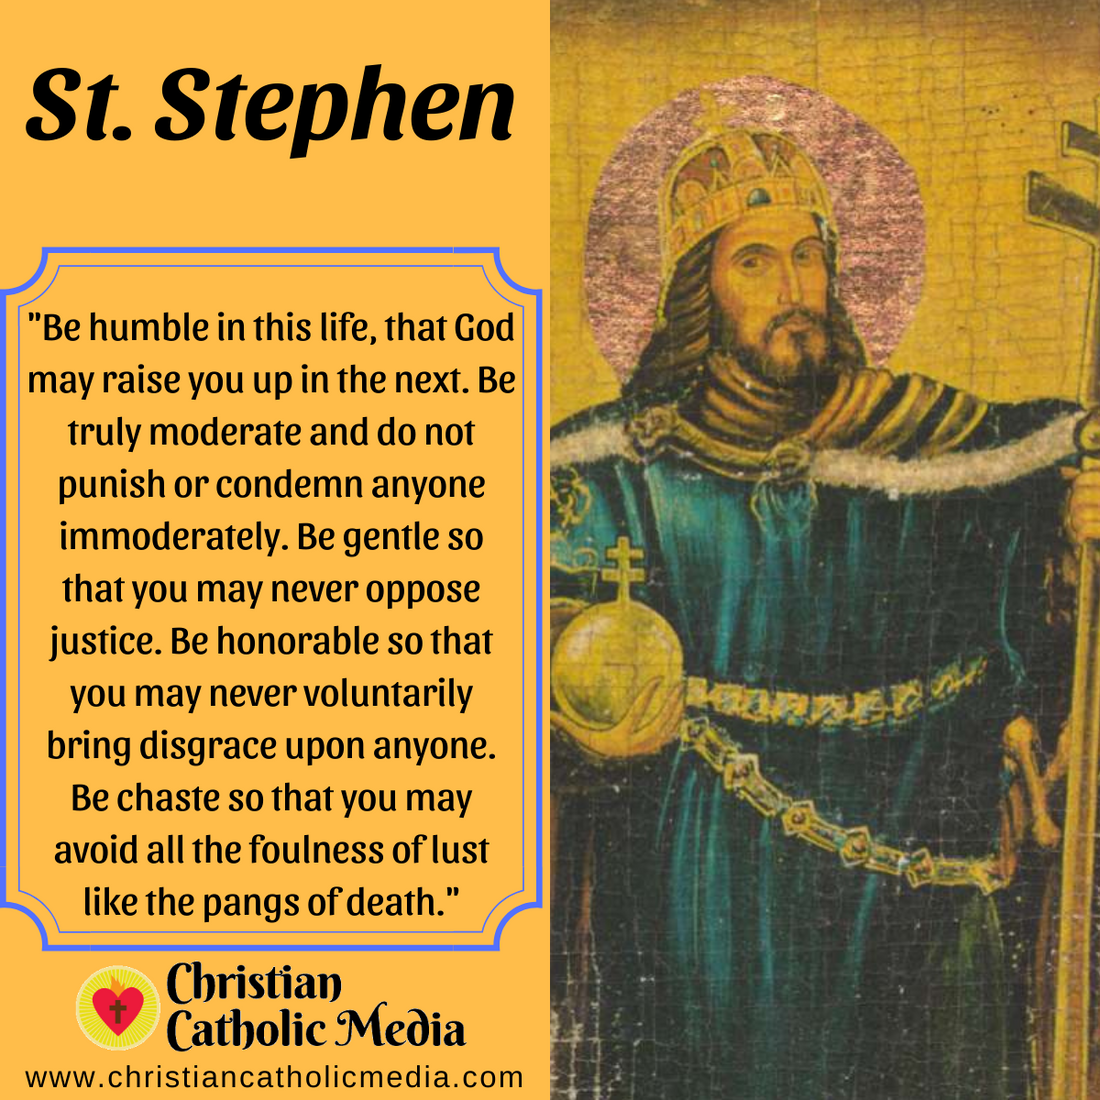 St. Stephen - Monday August 16, 2021